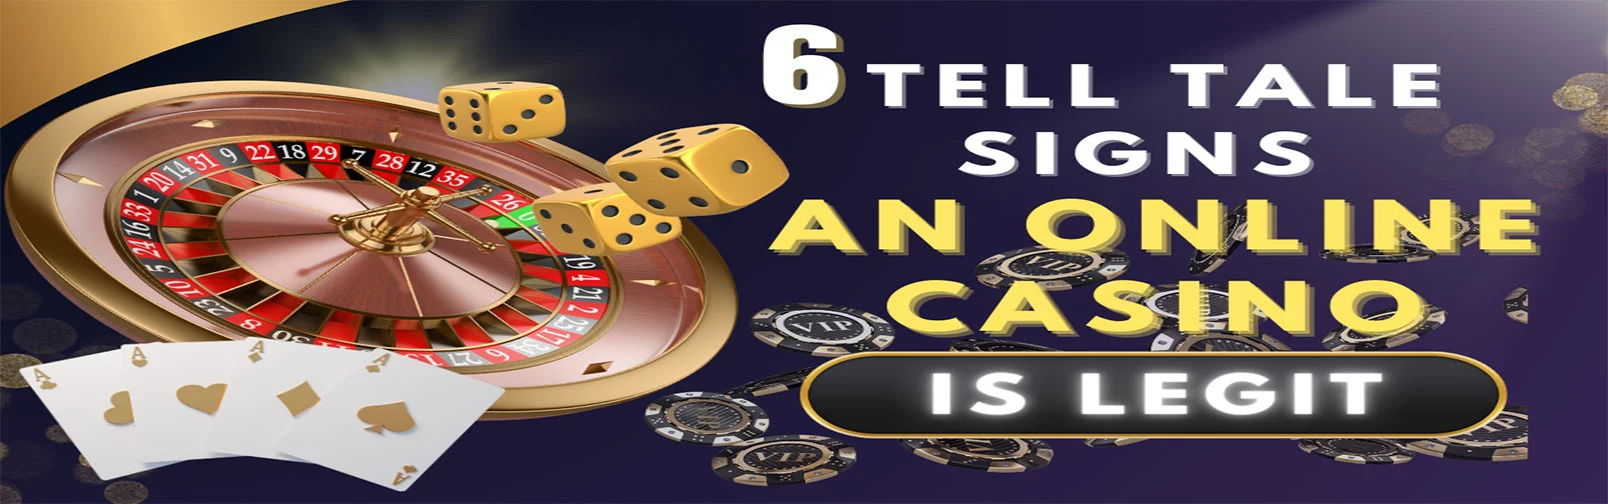 6 Tell Tale Signs An Online Casino Is Legit